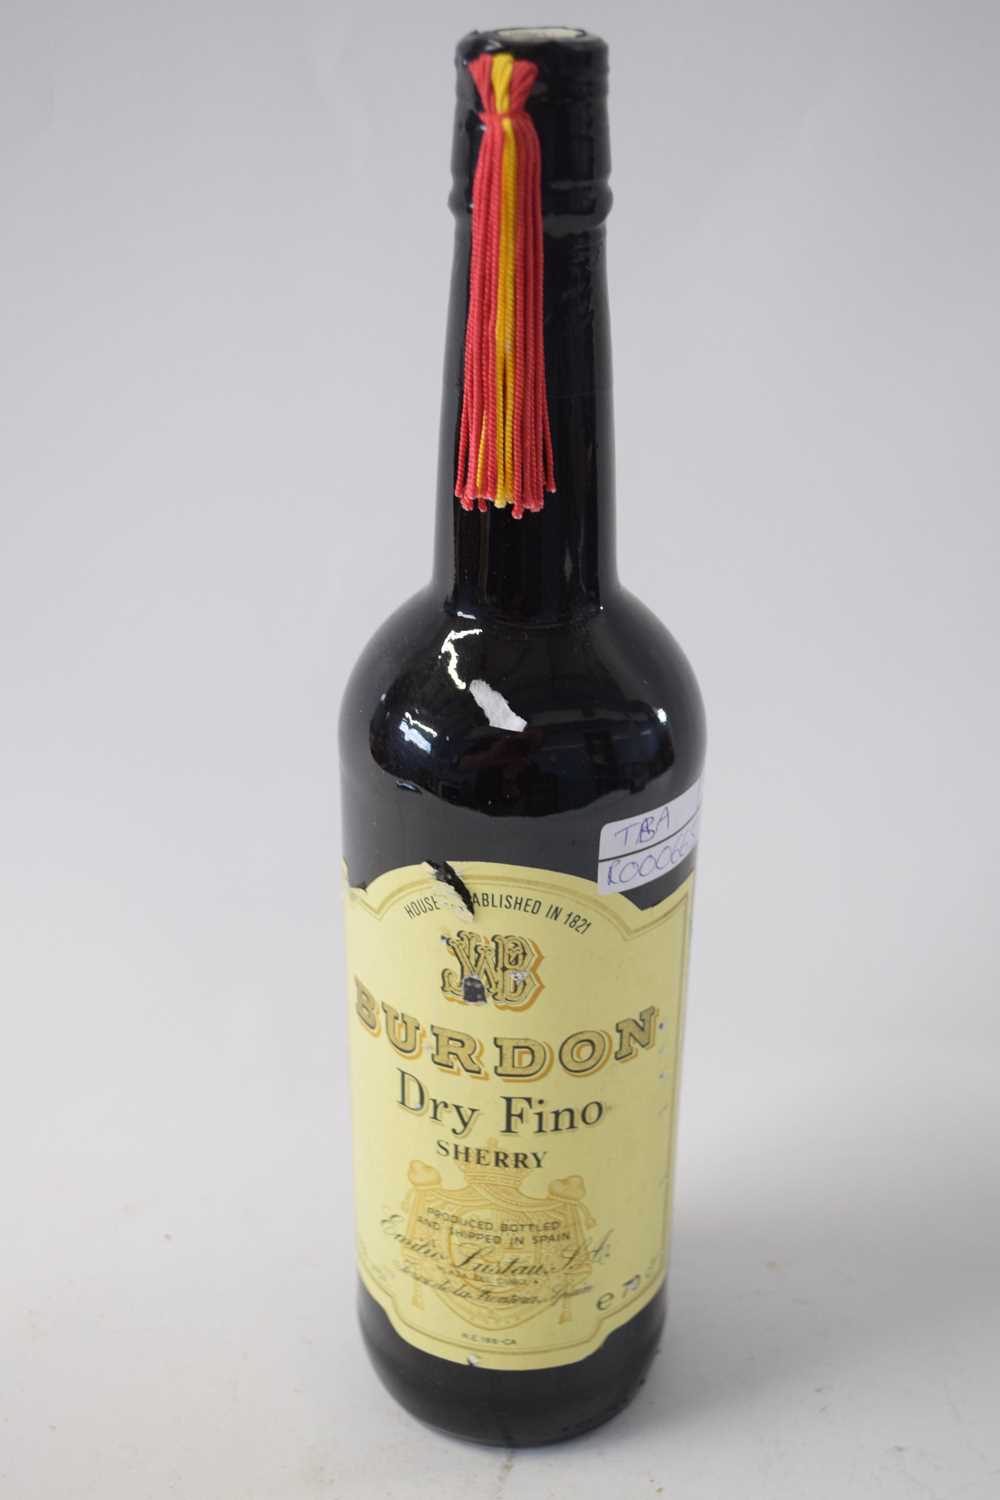 Burdon Dry Fino Sherry, 70cl bottle